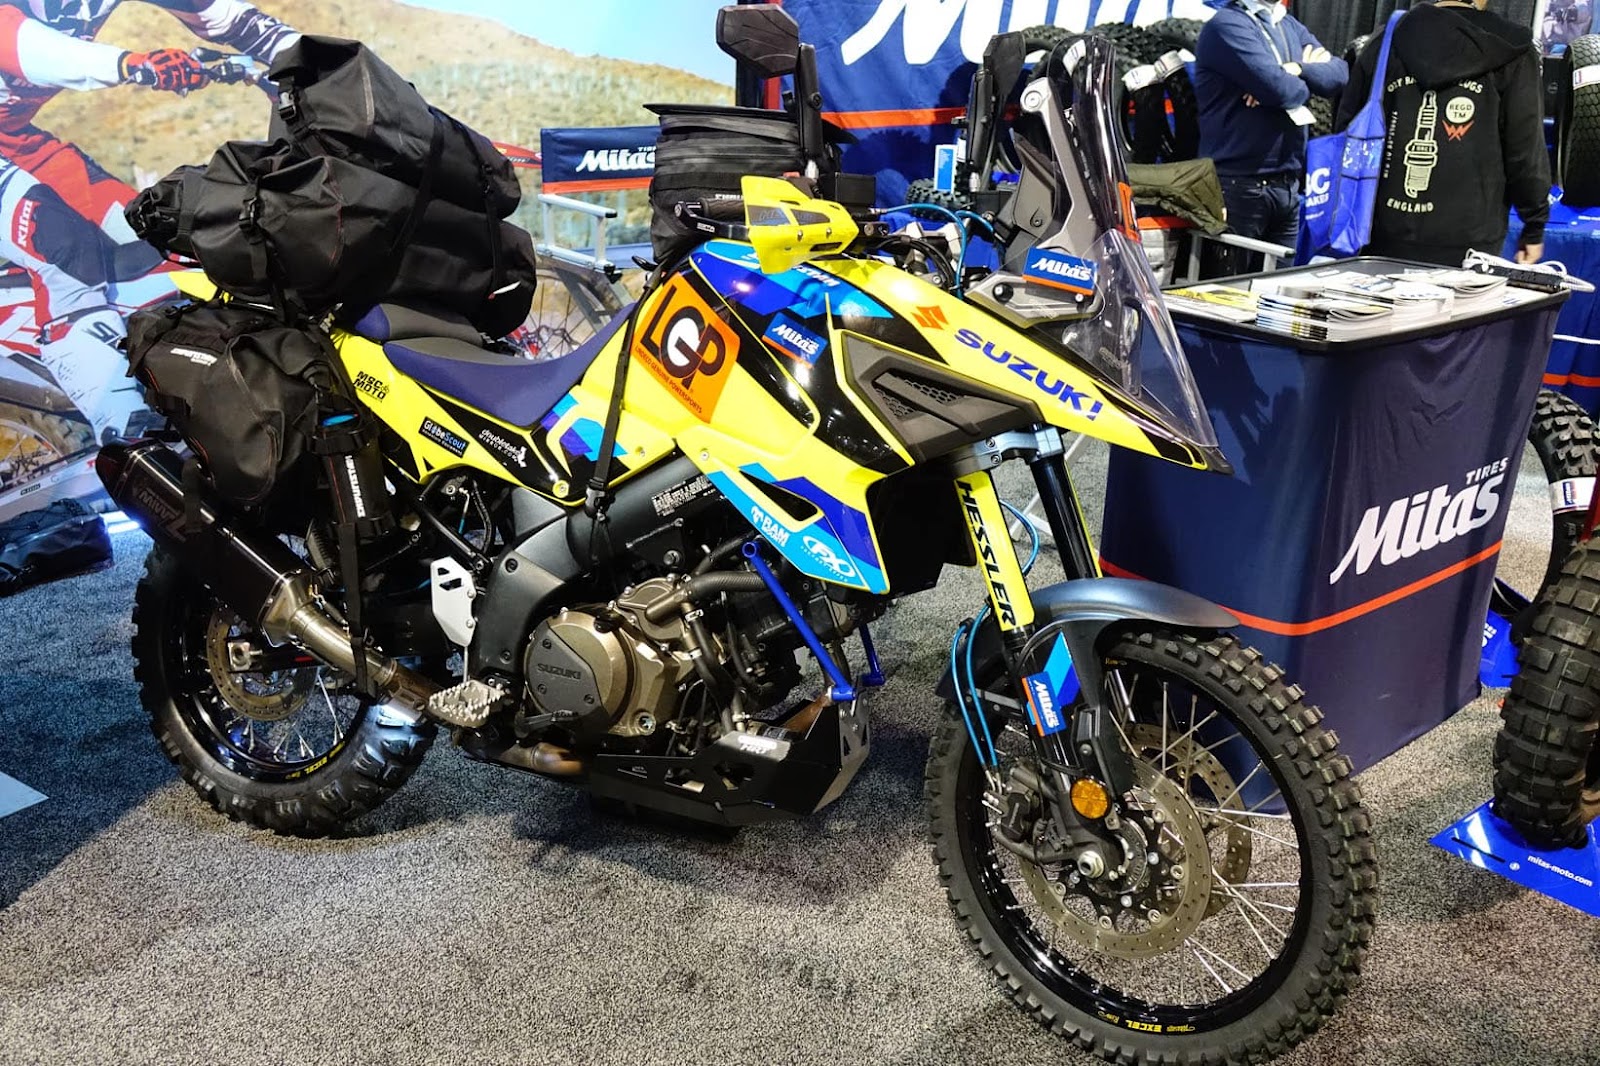 Suzuki racing dirt bike showcased at AIMExpo, premier event for powersports industry